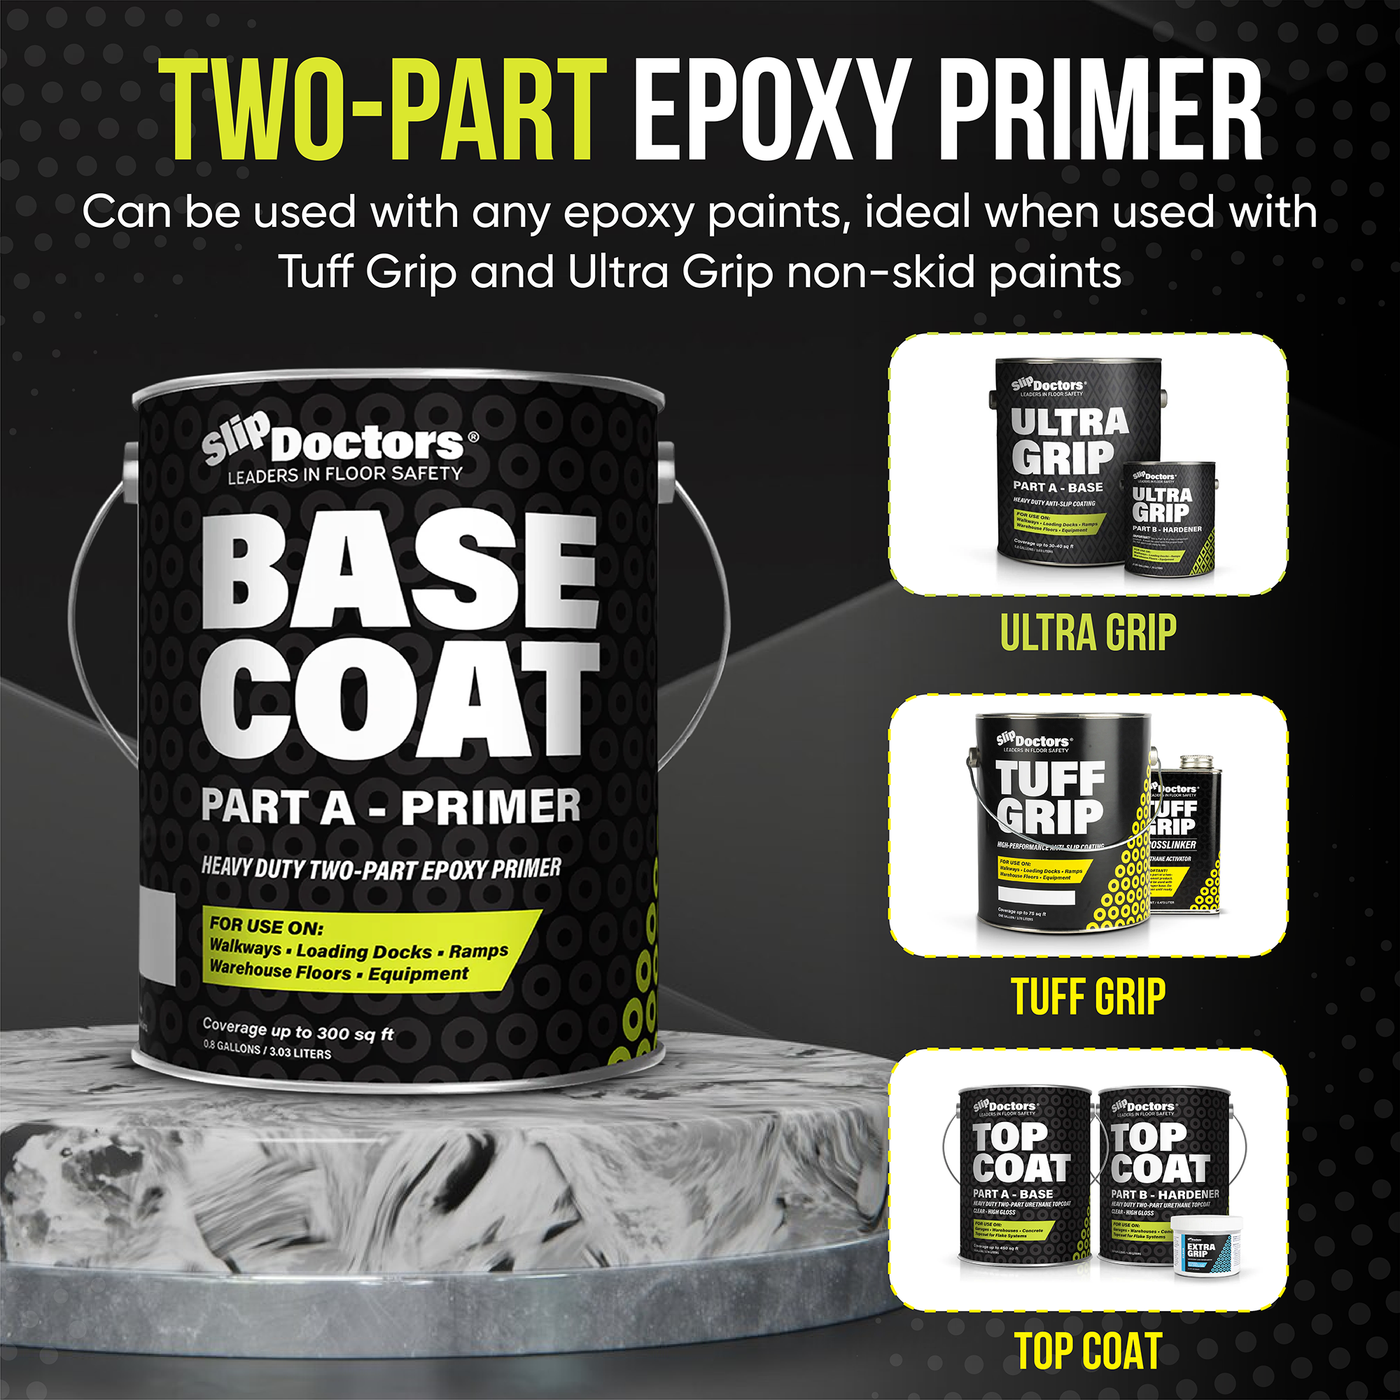 Base Coat 2K Epoxy Paint Primer - Light Gray